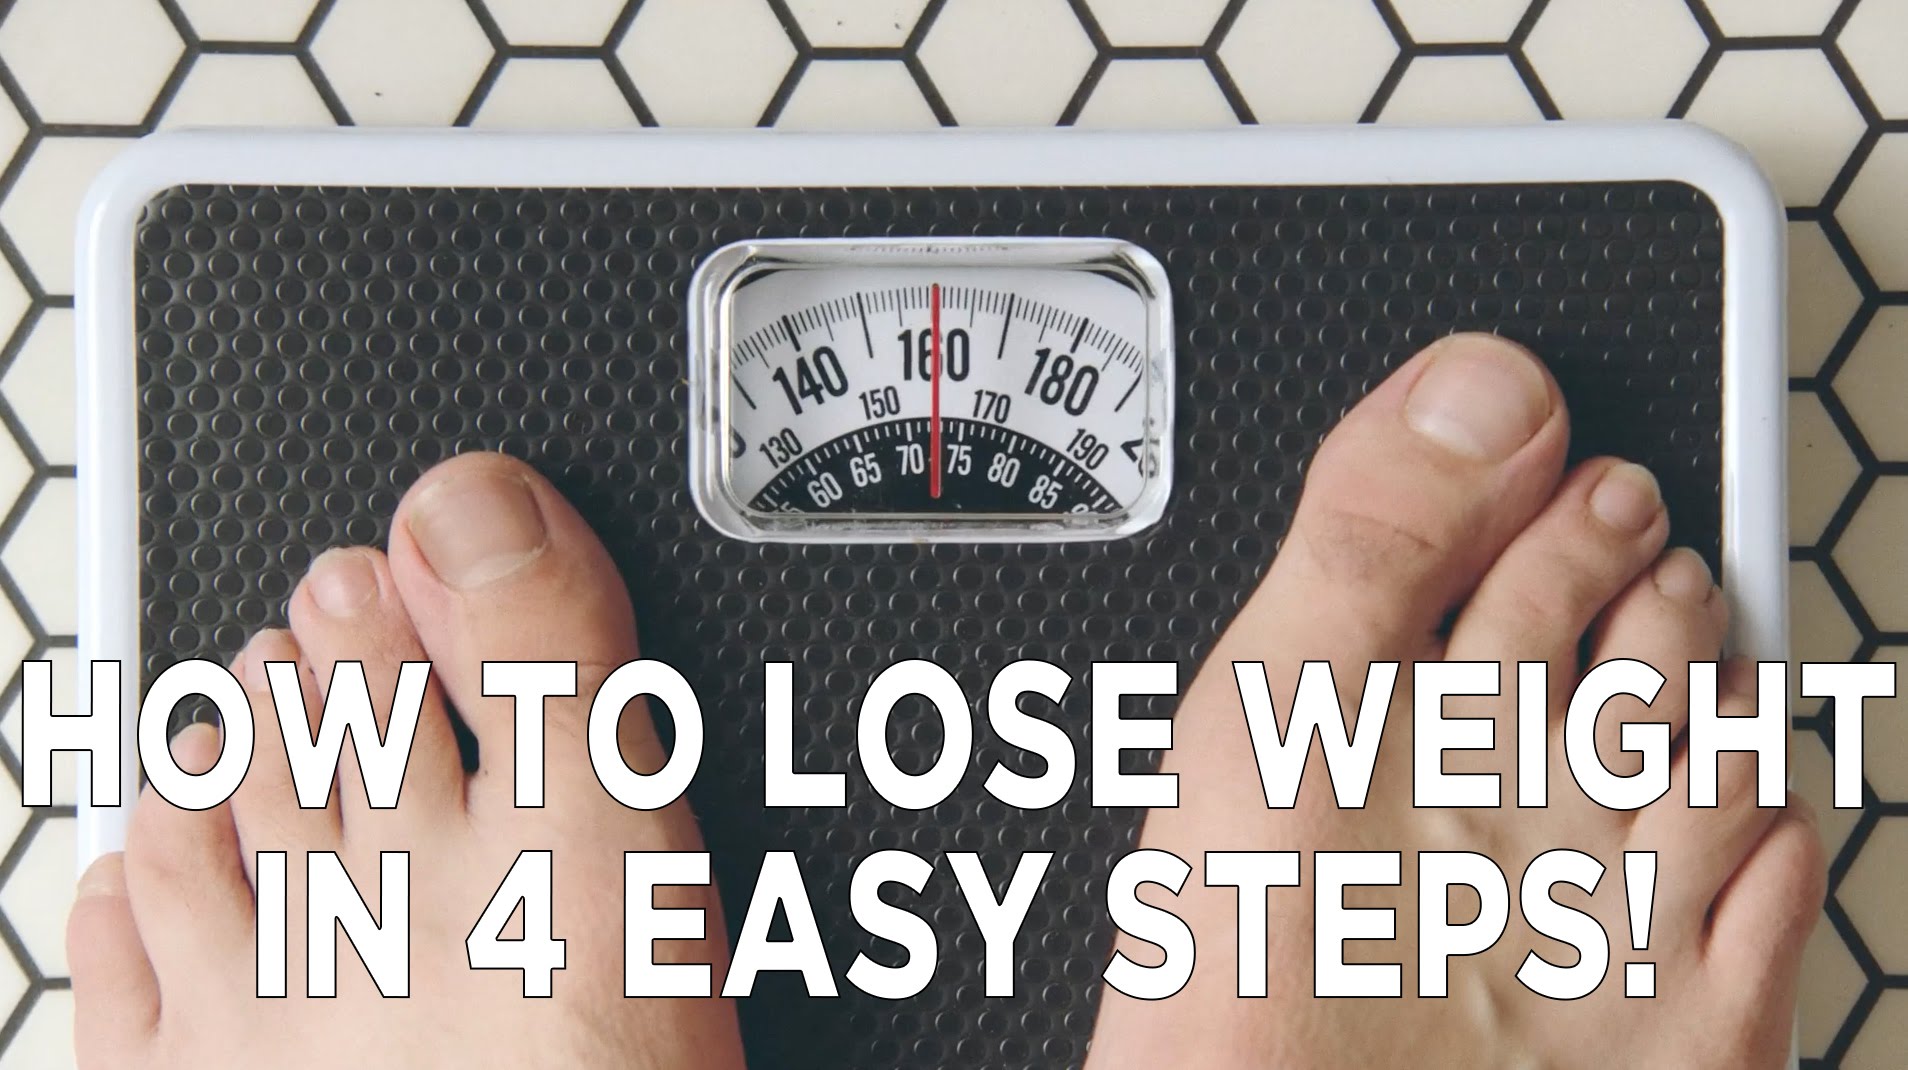 Easy steps 2. 4 Easy steps. Step Light click.